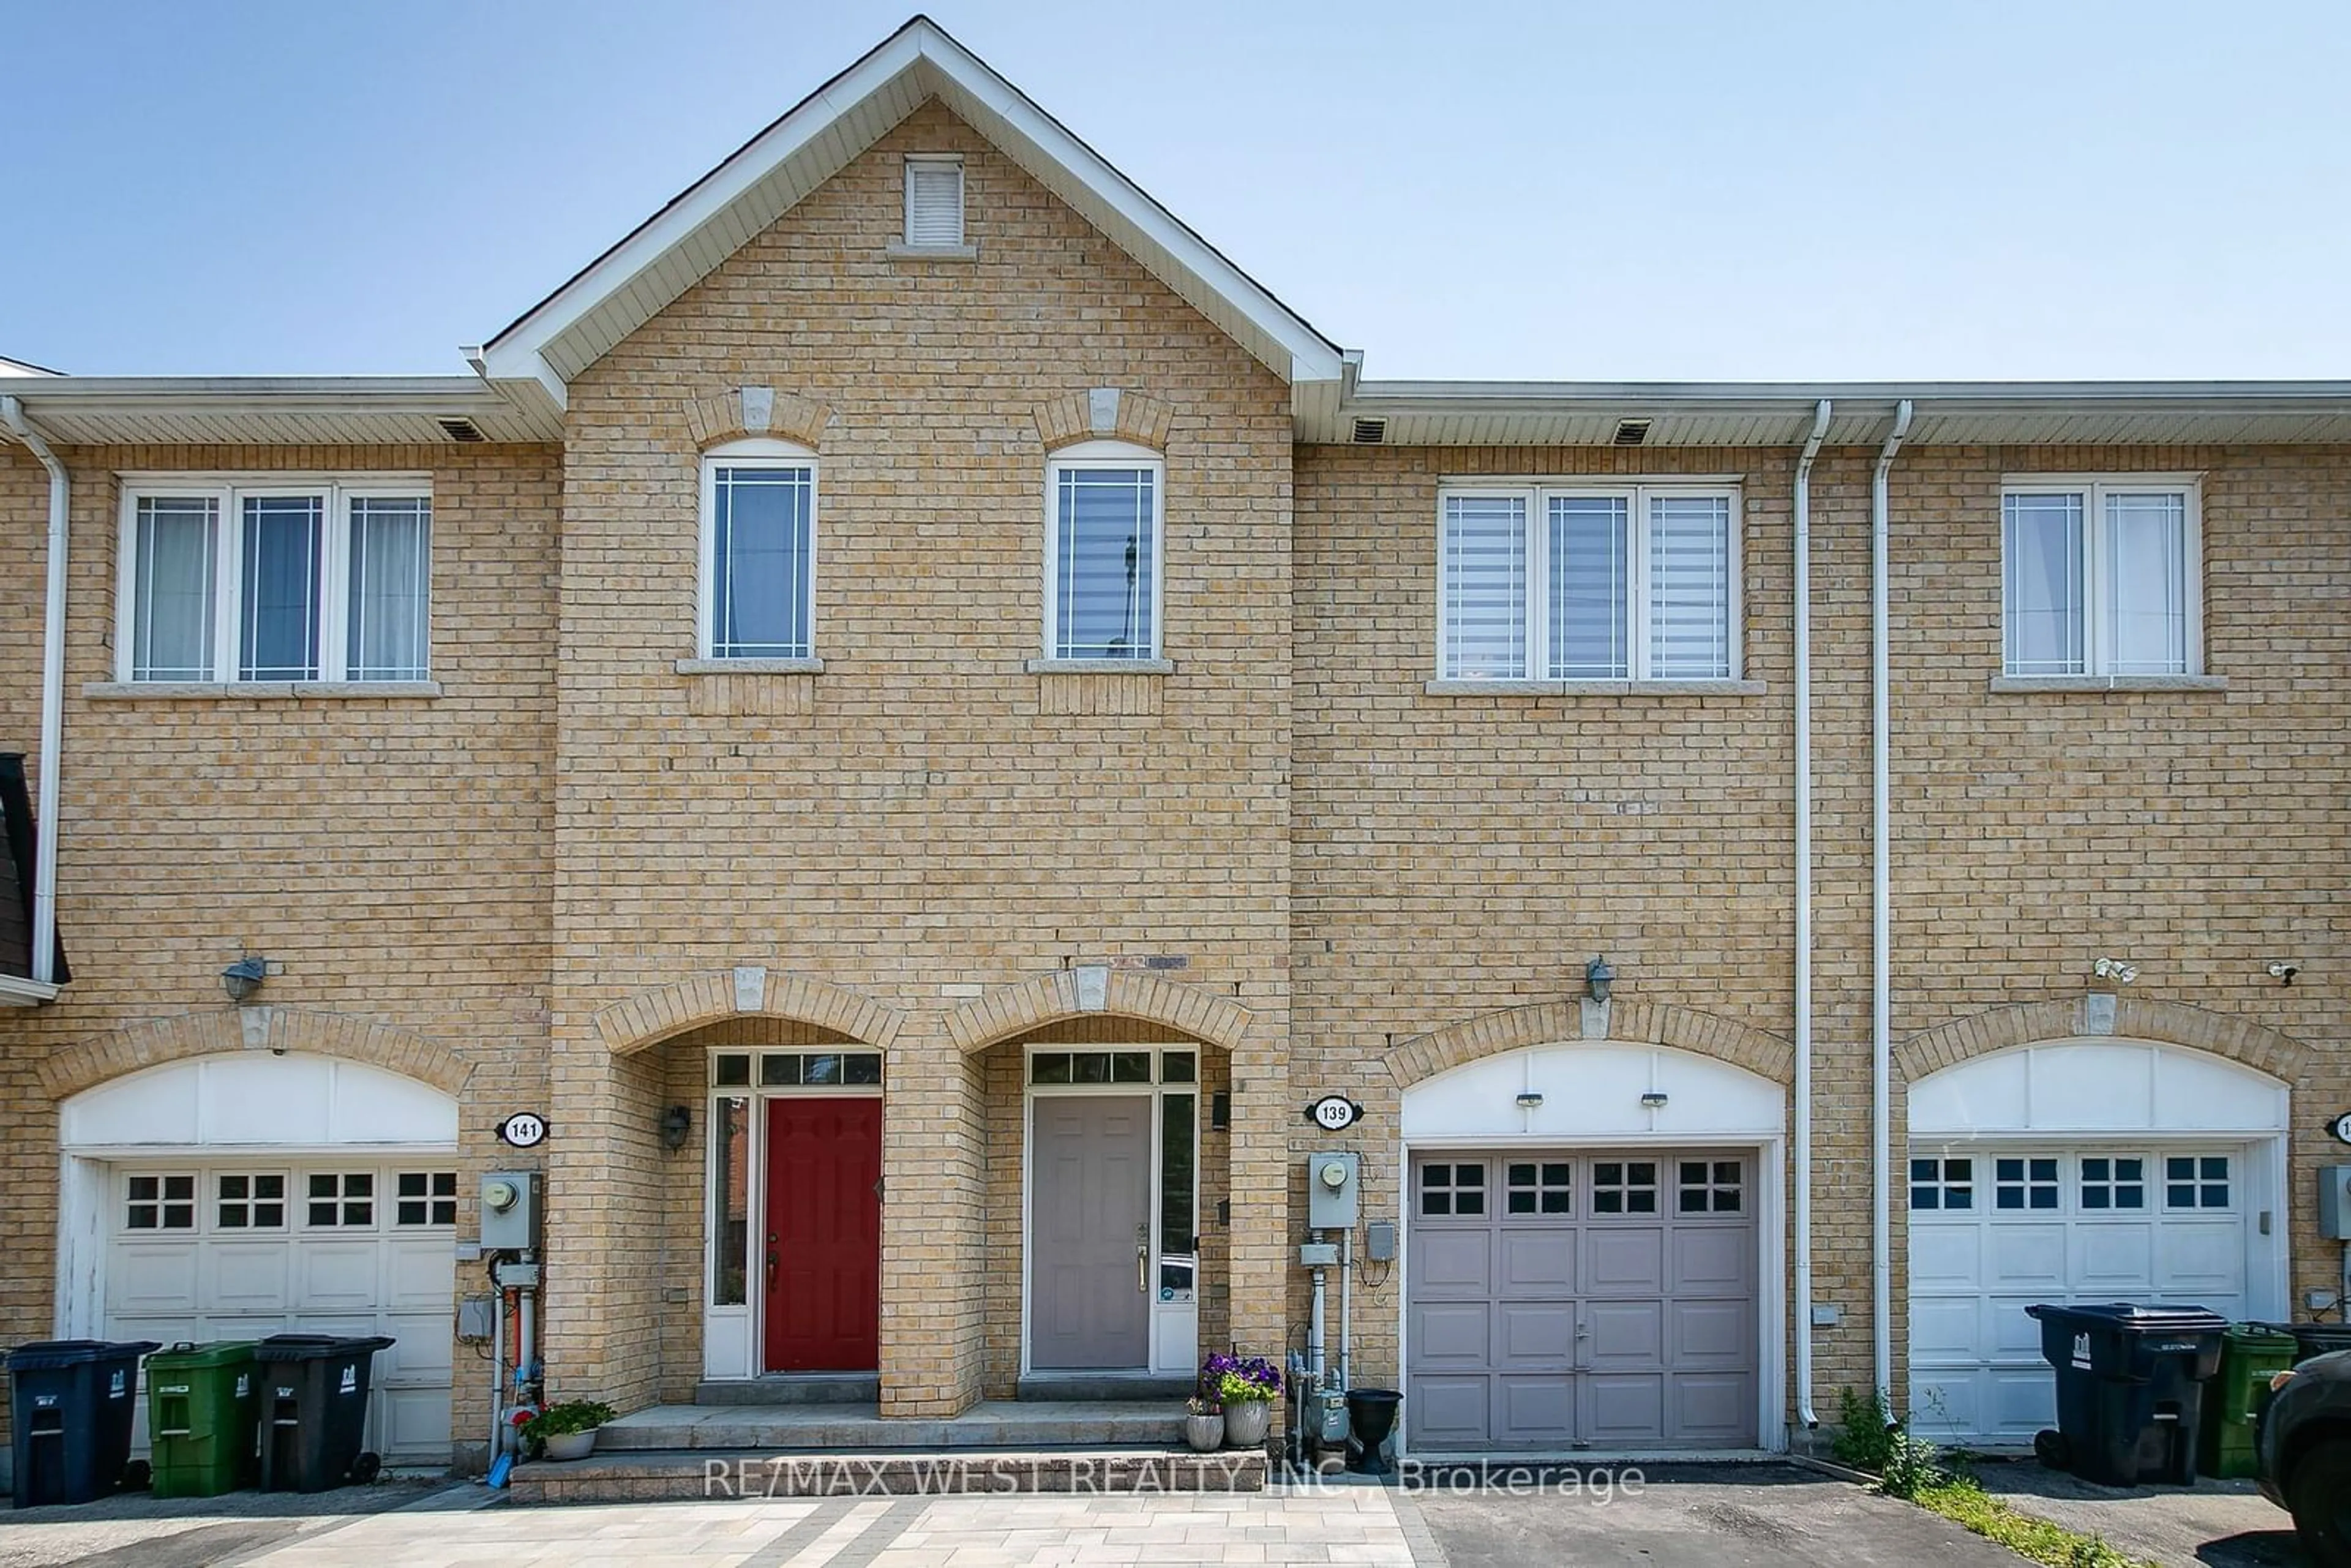 Home with brick exterior material for 139 Homestead Rd, Toronto Ontario M1E 3S1